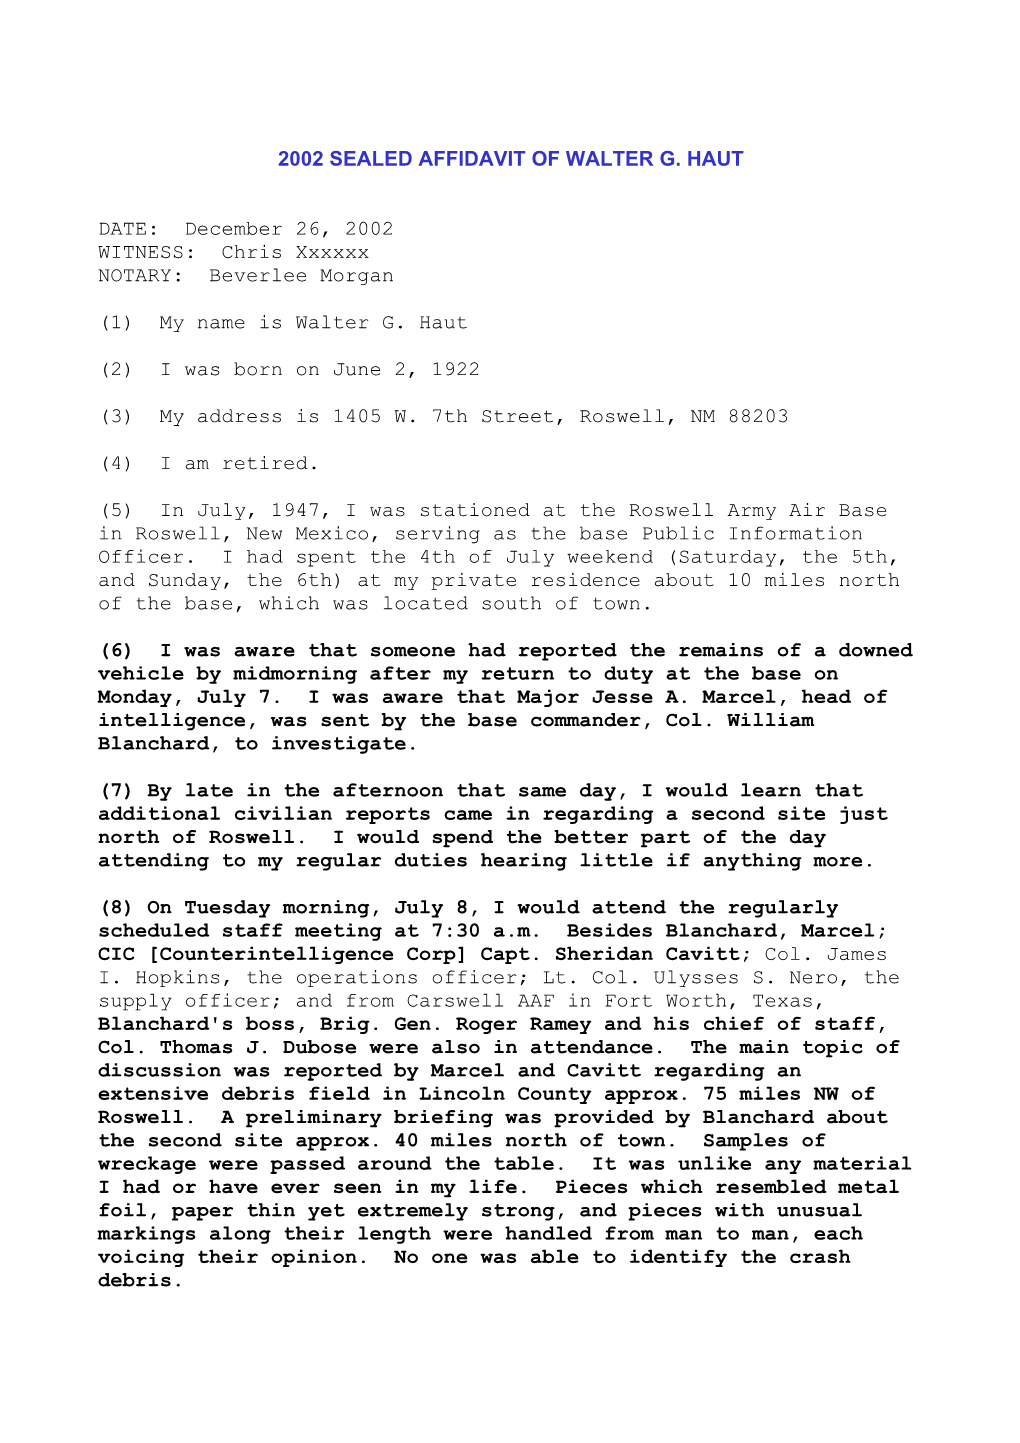 2002 Sealed Affidavit of Walter G